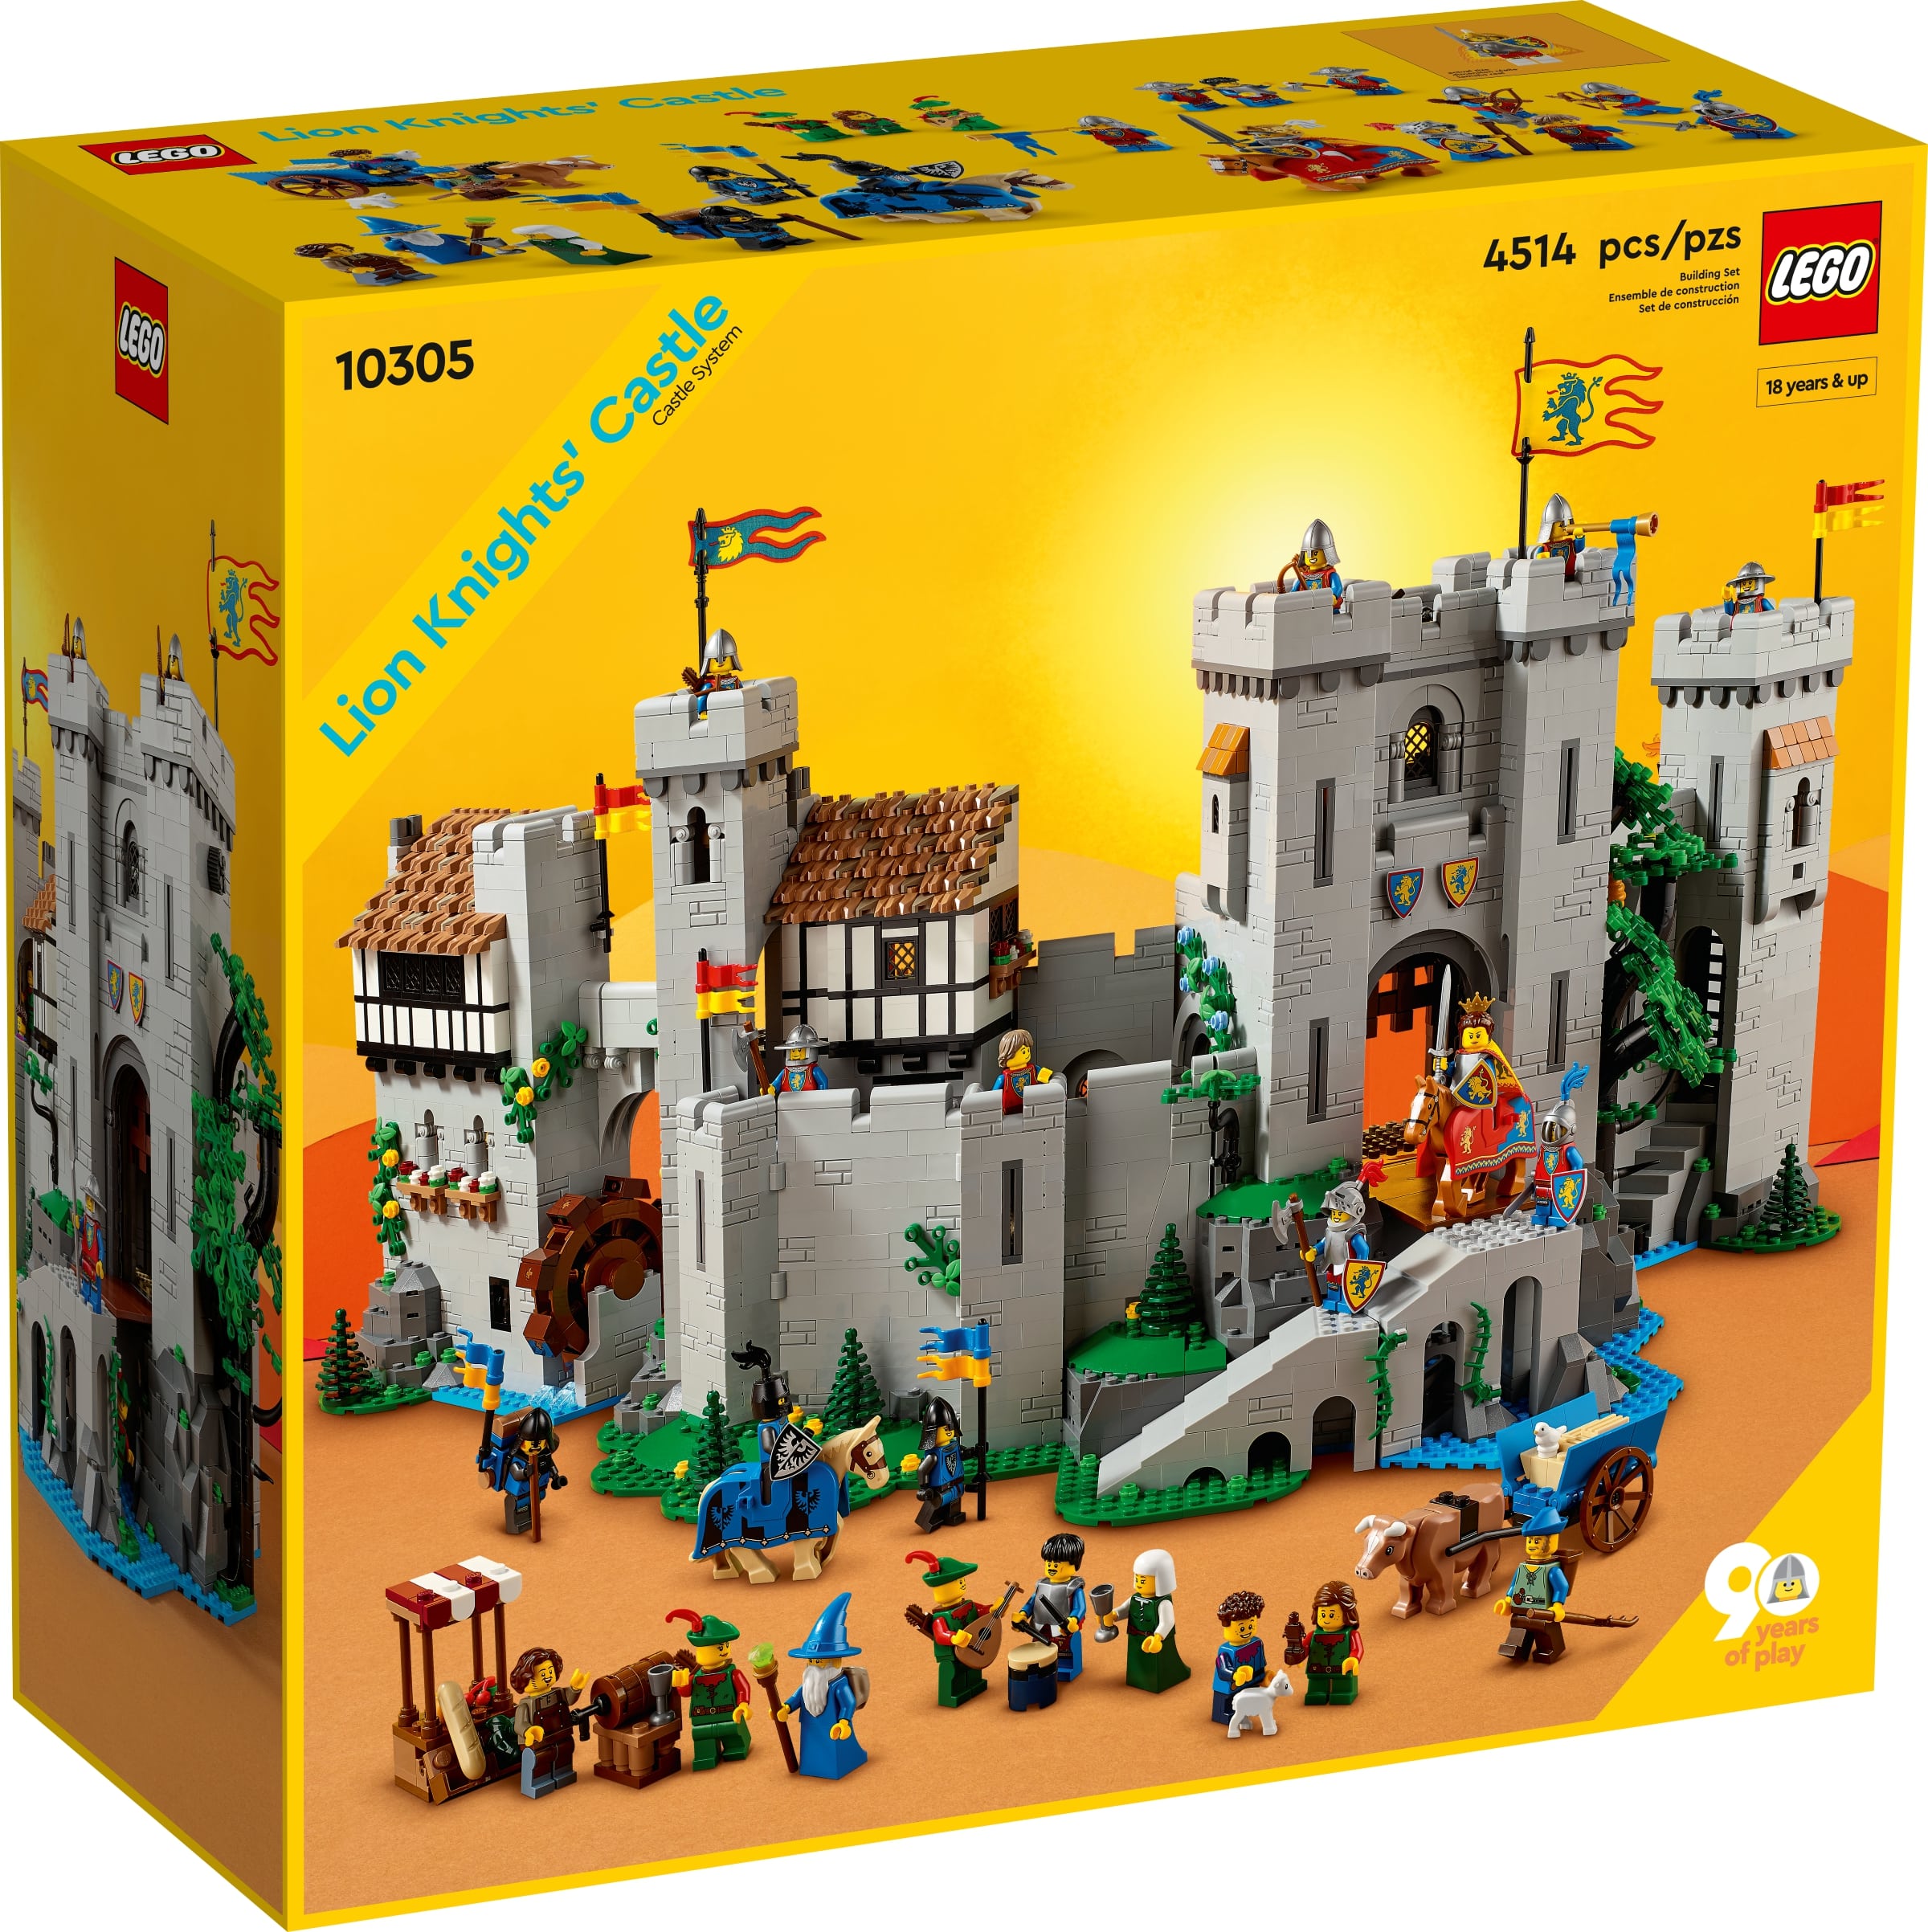 Most Popular Lego Sets - Buy on StockX